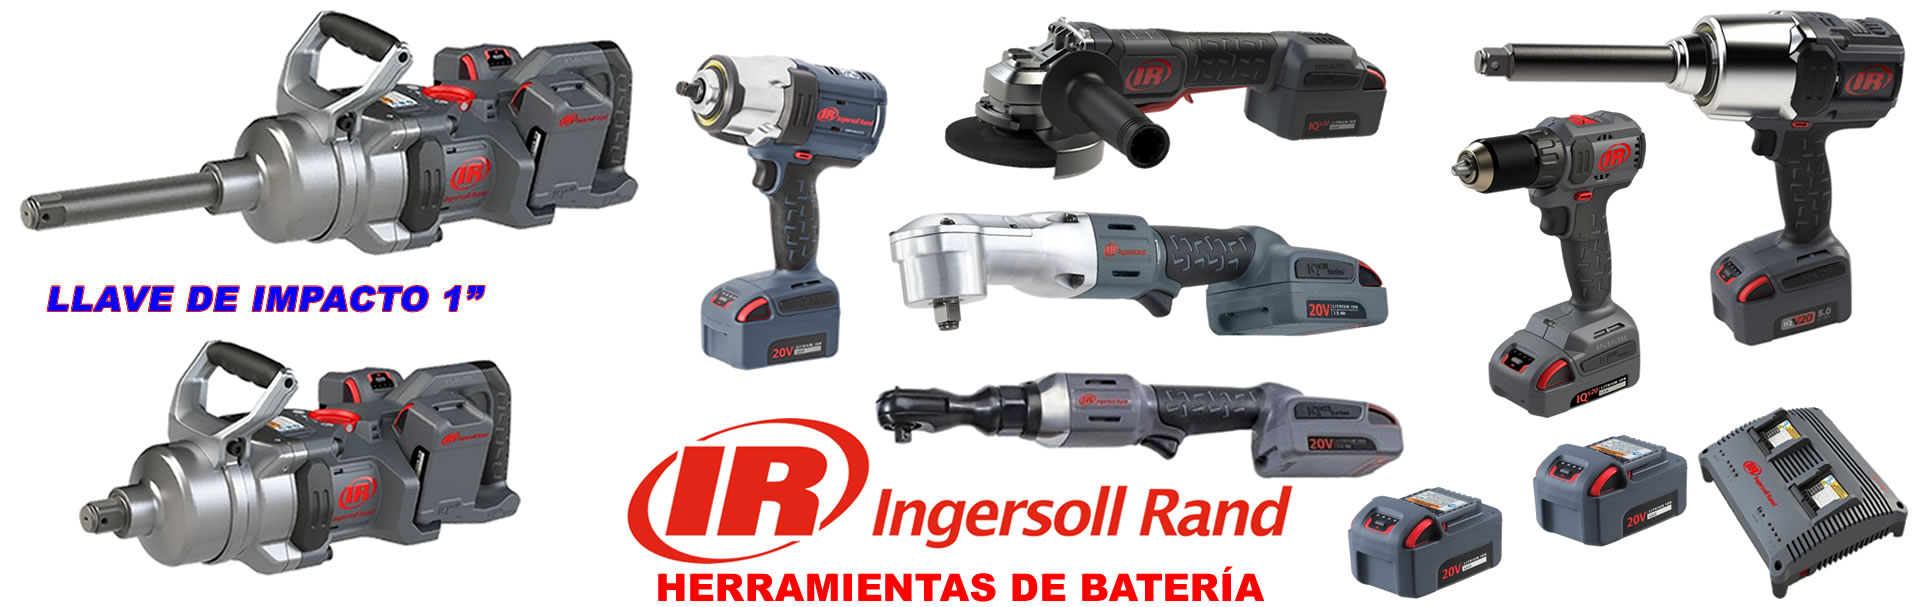 alcaner_ingersoll-rand_soluciones-industria-automación_equipamento_maquinaria_servicio-tecnico_distribuidor-oficial-ingersoll-rand_madrid-espana_banner-3-ir-bateria